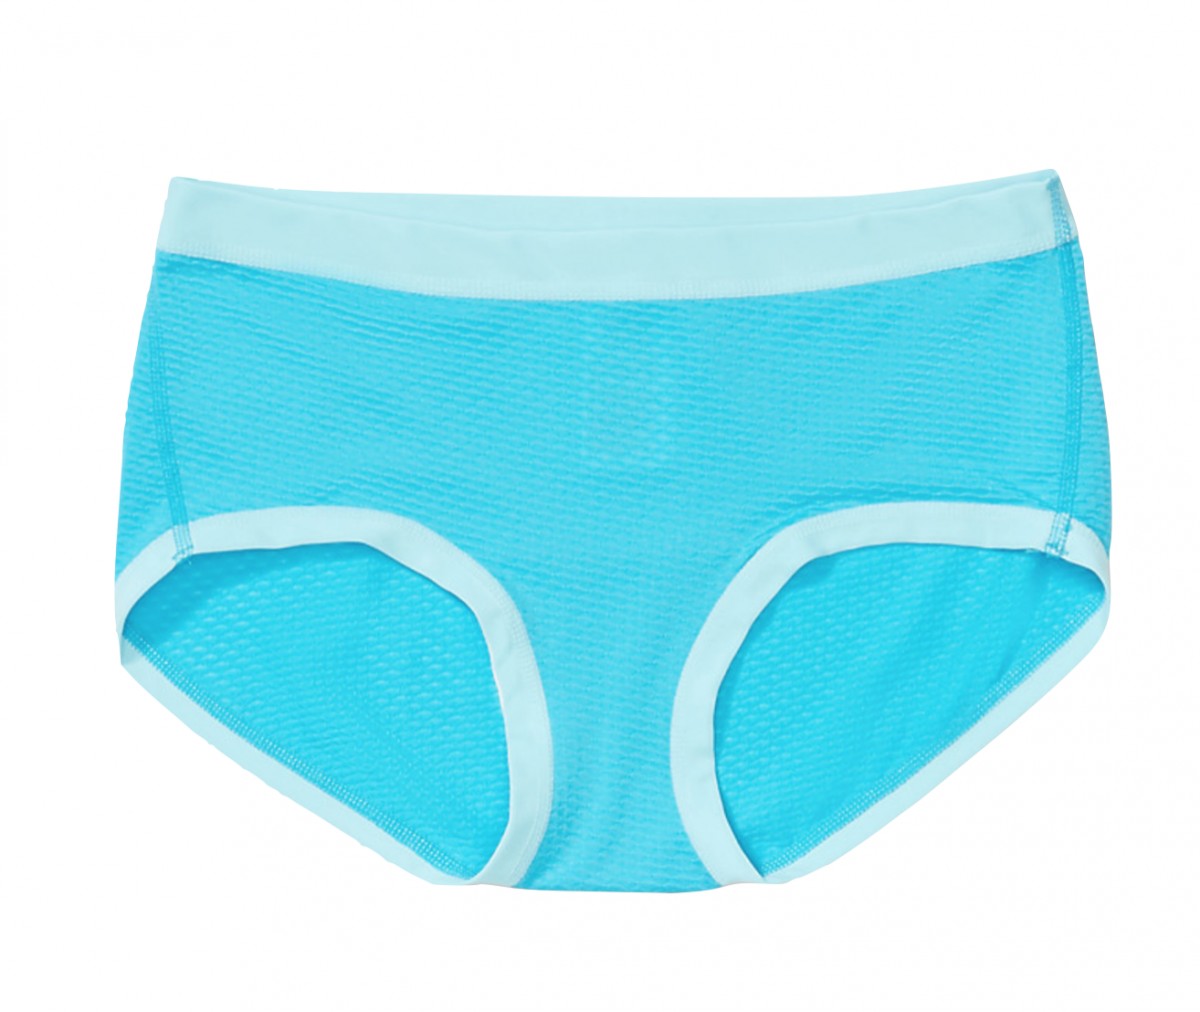 exofficio give-n-go sport mesh hipkini travel underwear women review